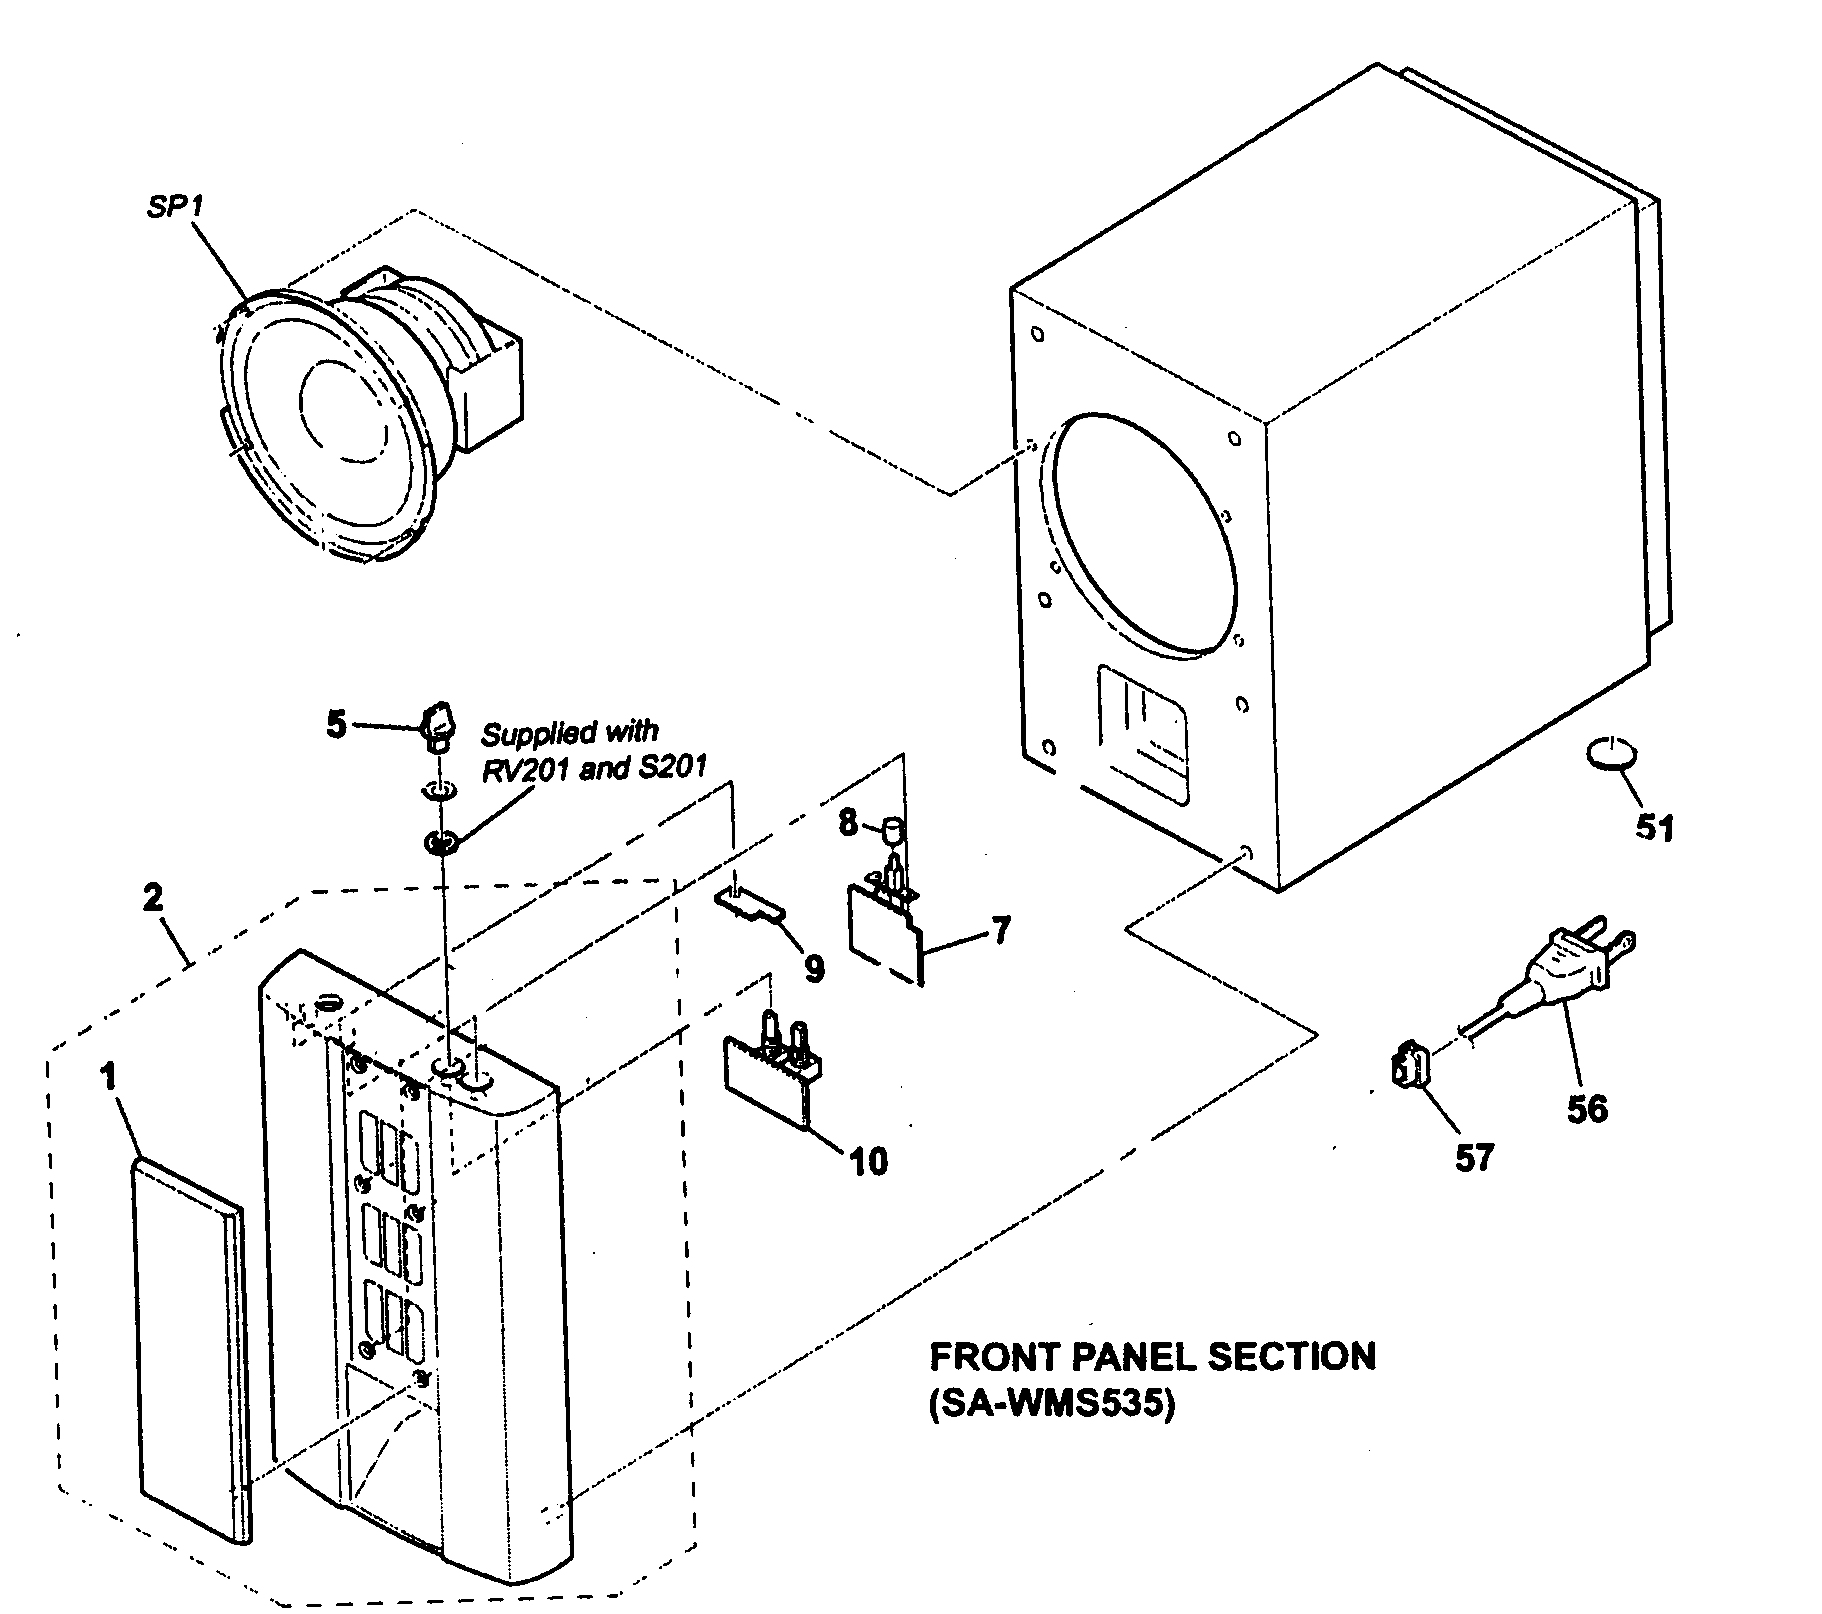 SONY SPEAKER Parts | Model SSMS535 | Sears PartsDirect speaker parts diagram 